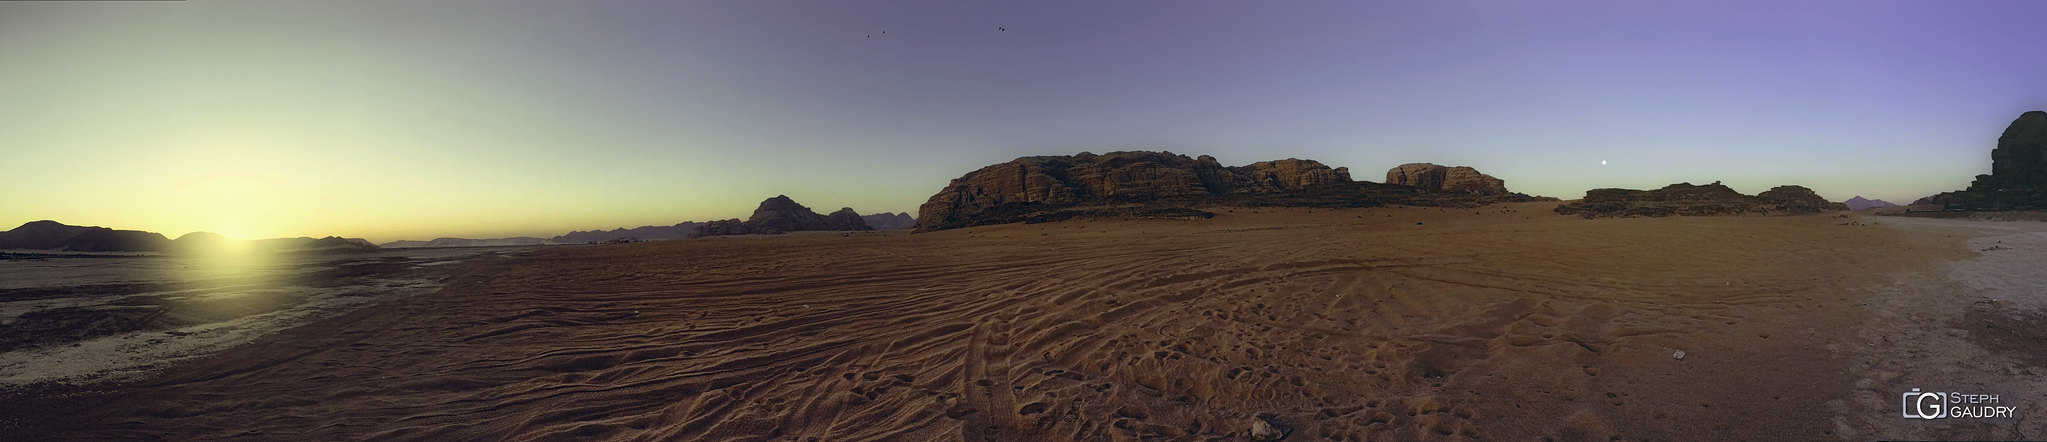 Wadi-Rum panorama gsm [Klik om de diavoorstelling te starten]